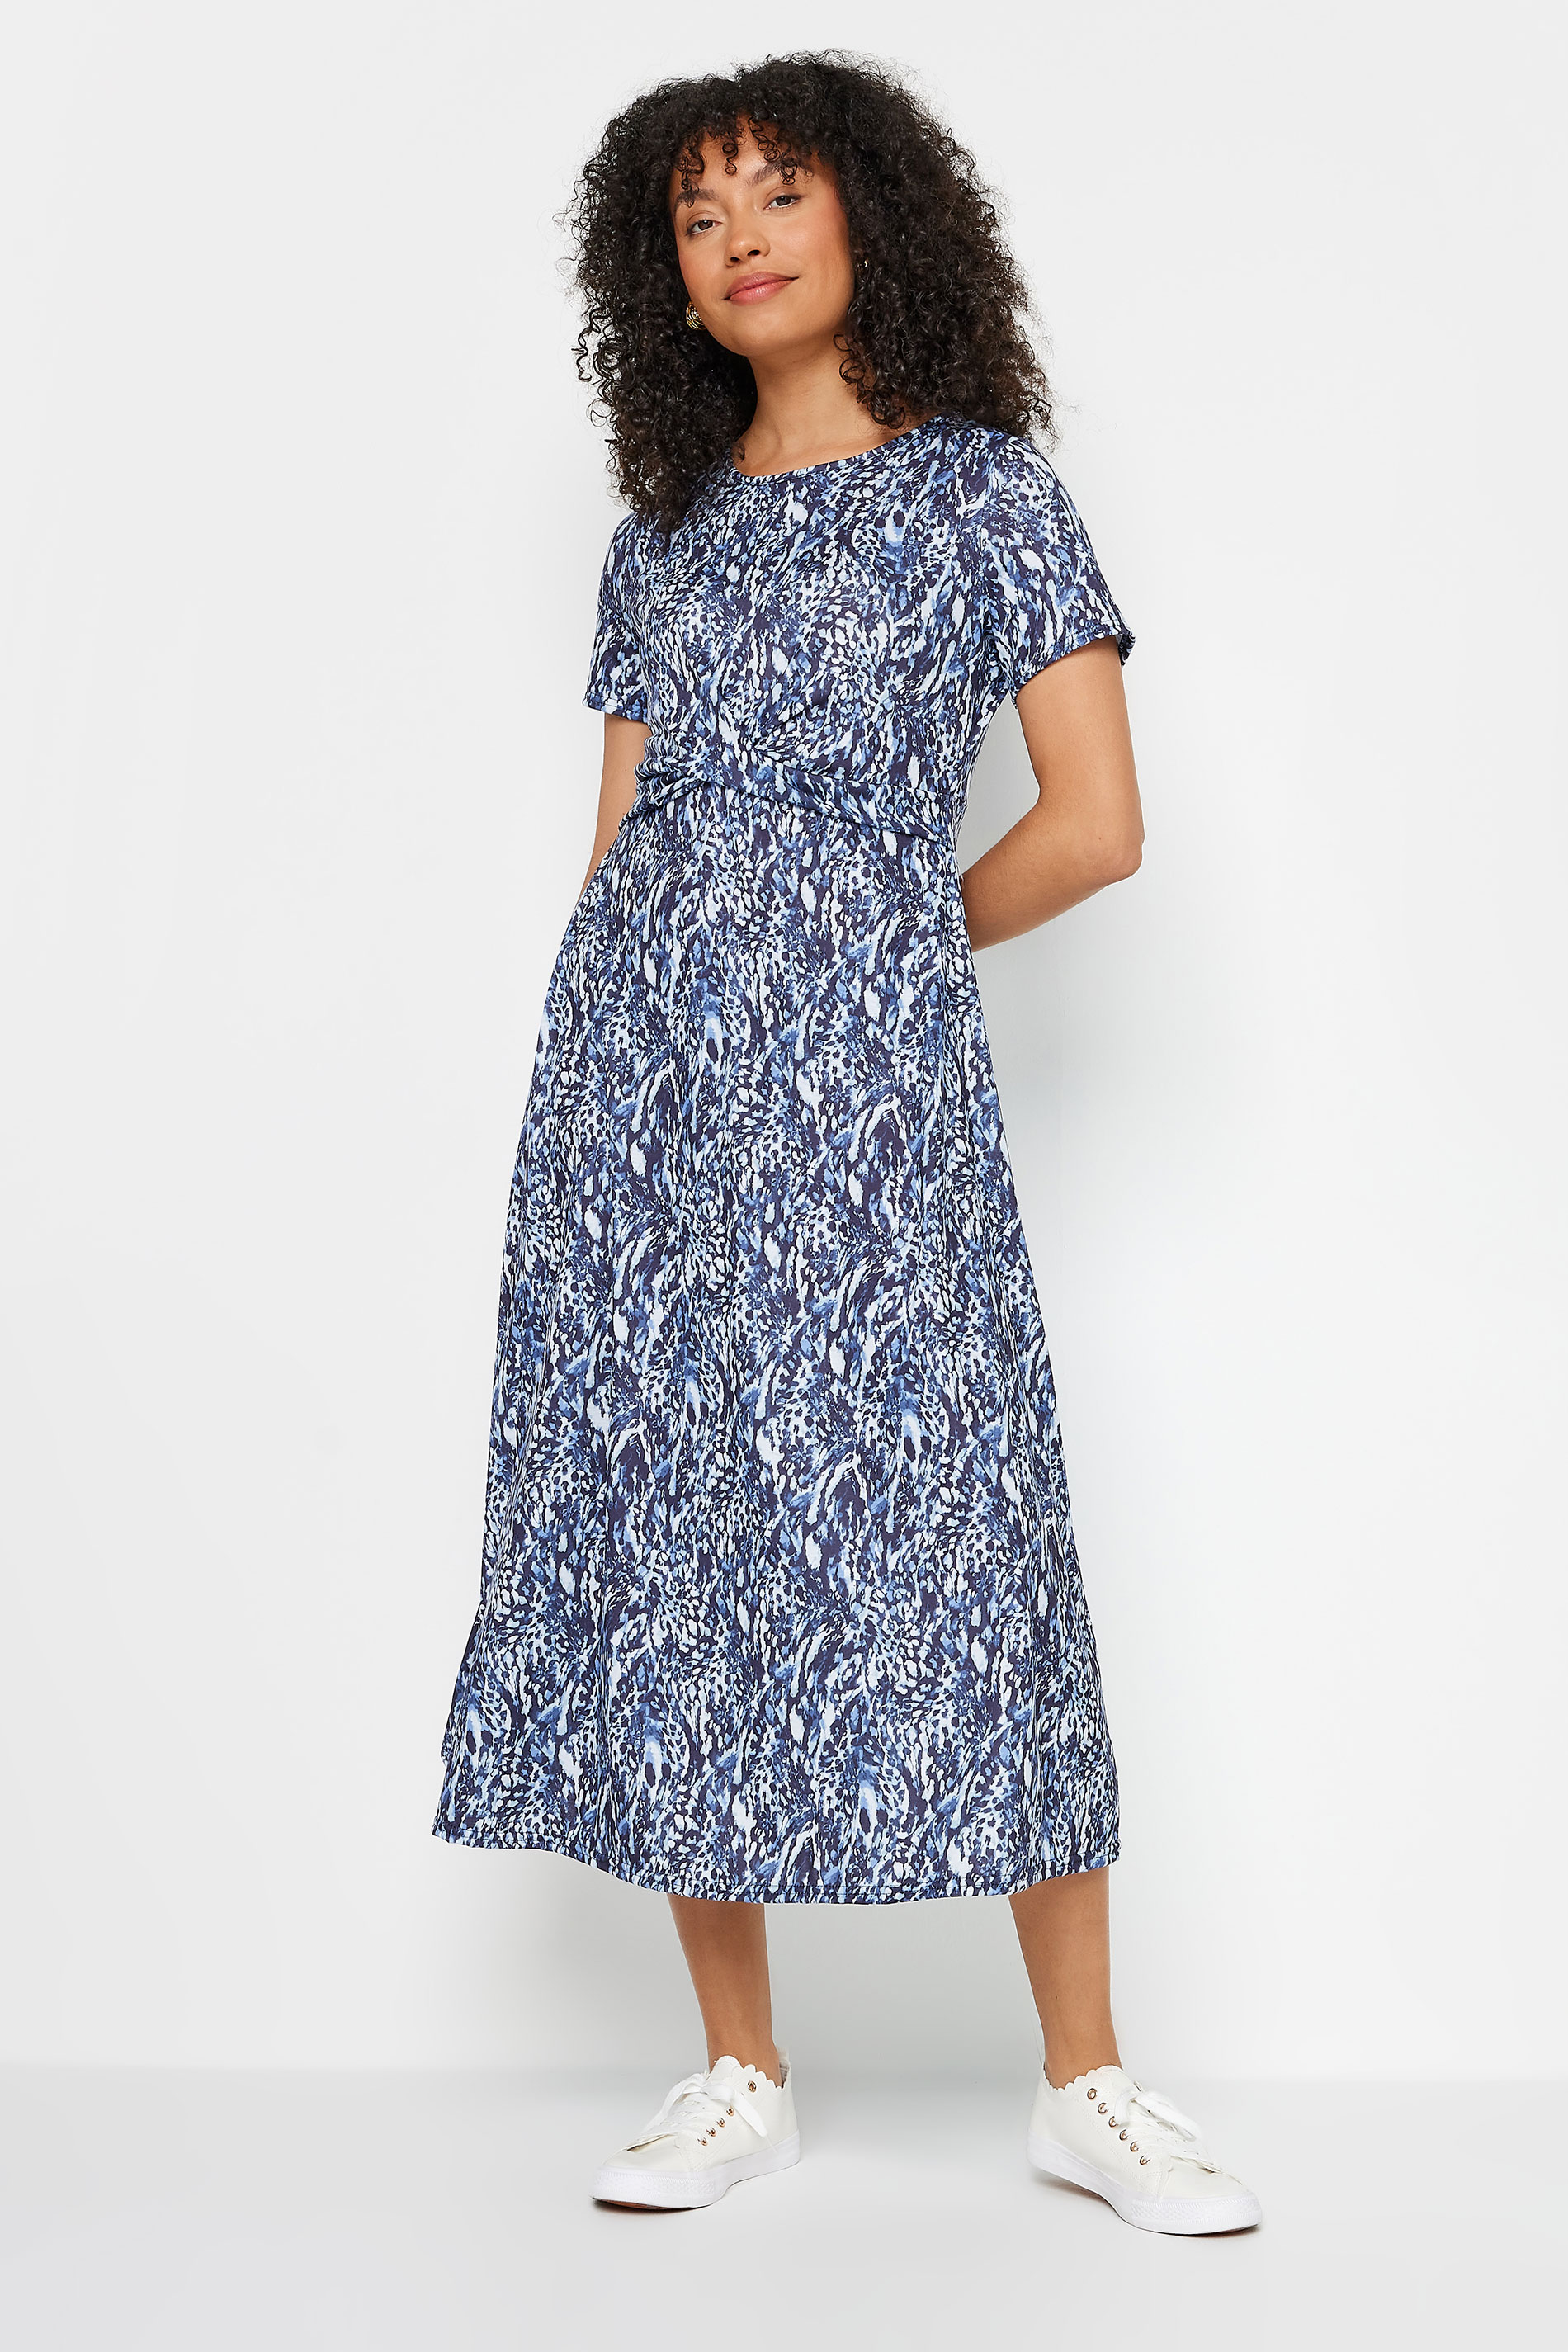 M&Co Navy Blue & White Abstract Print Short Sleeve Midi Dress | M&Co 2